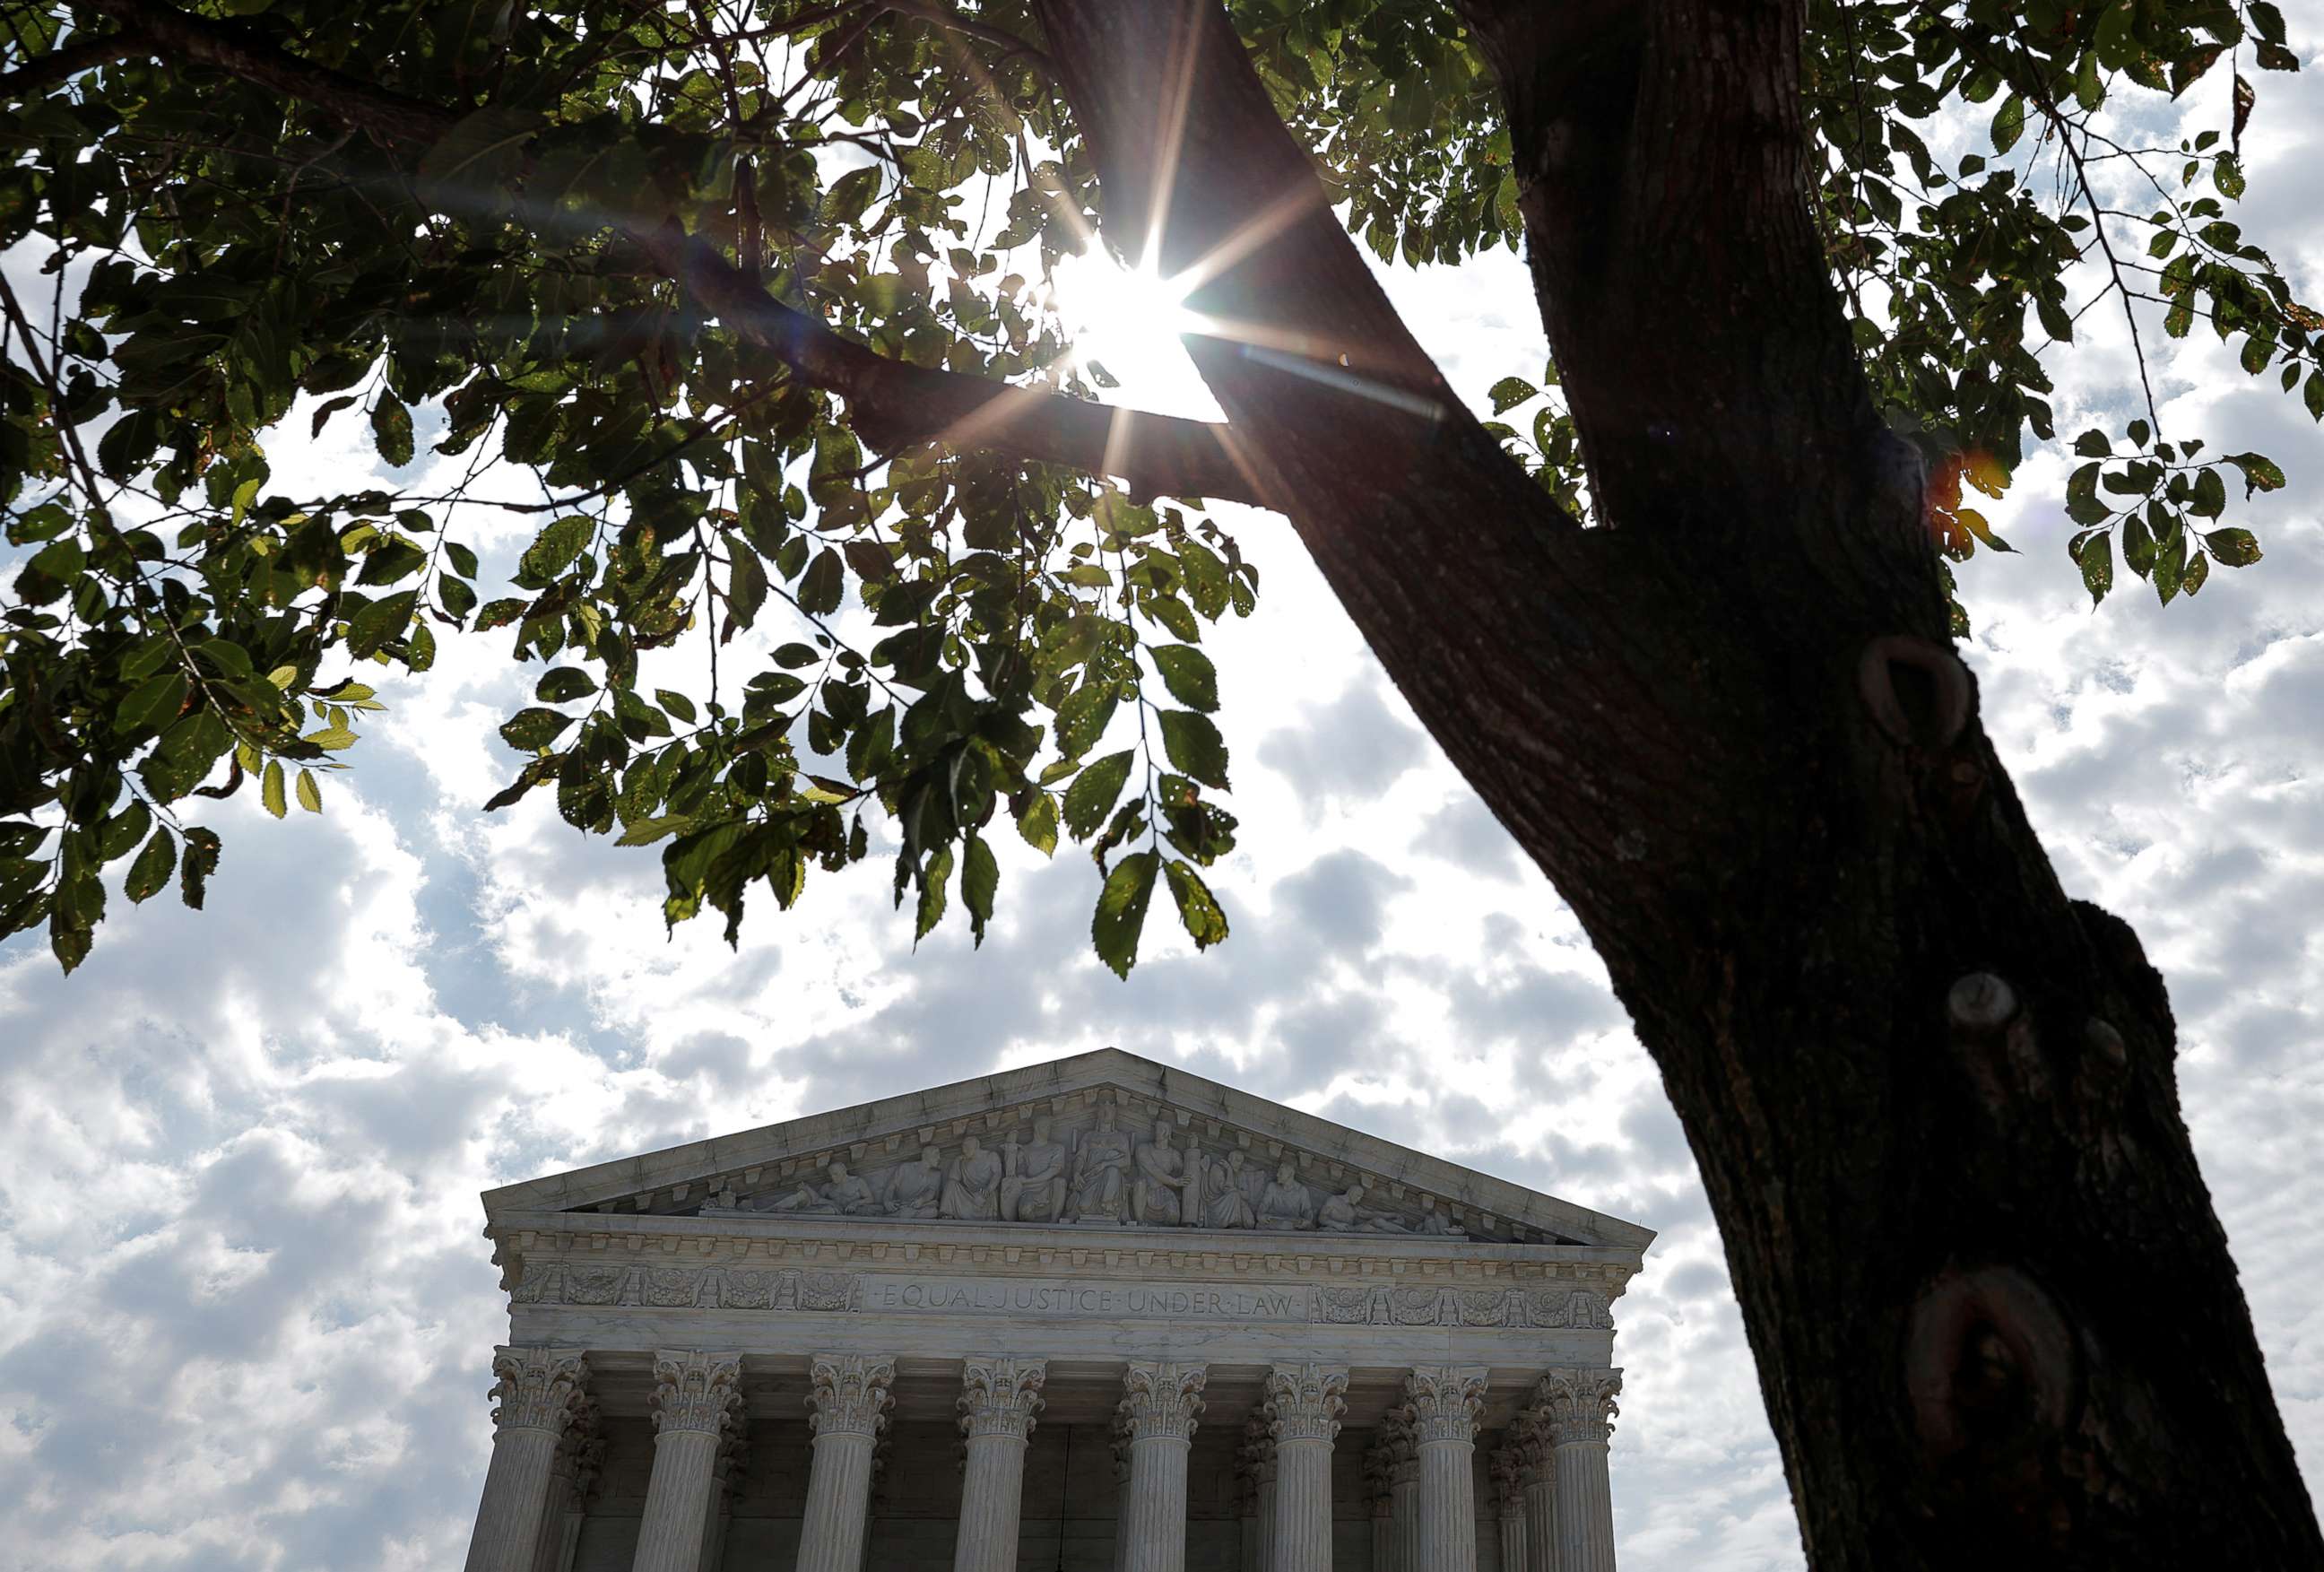 PHOTO: The U.S. Supreme Court is seen in Washington, D.C., June 14, 2021.